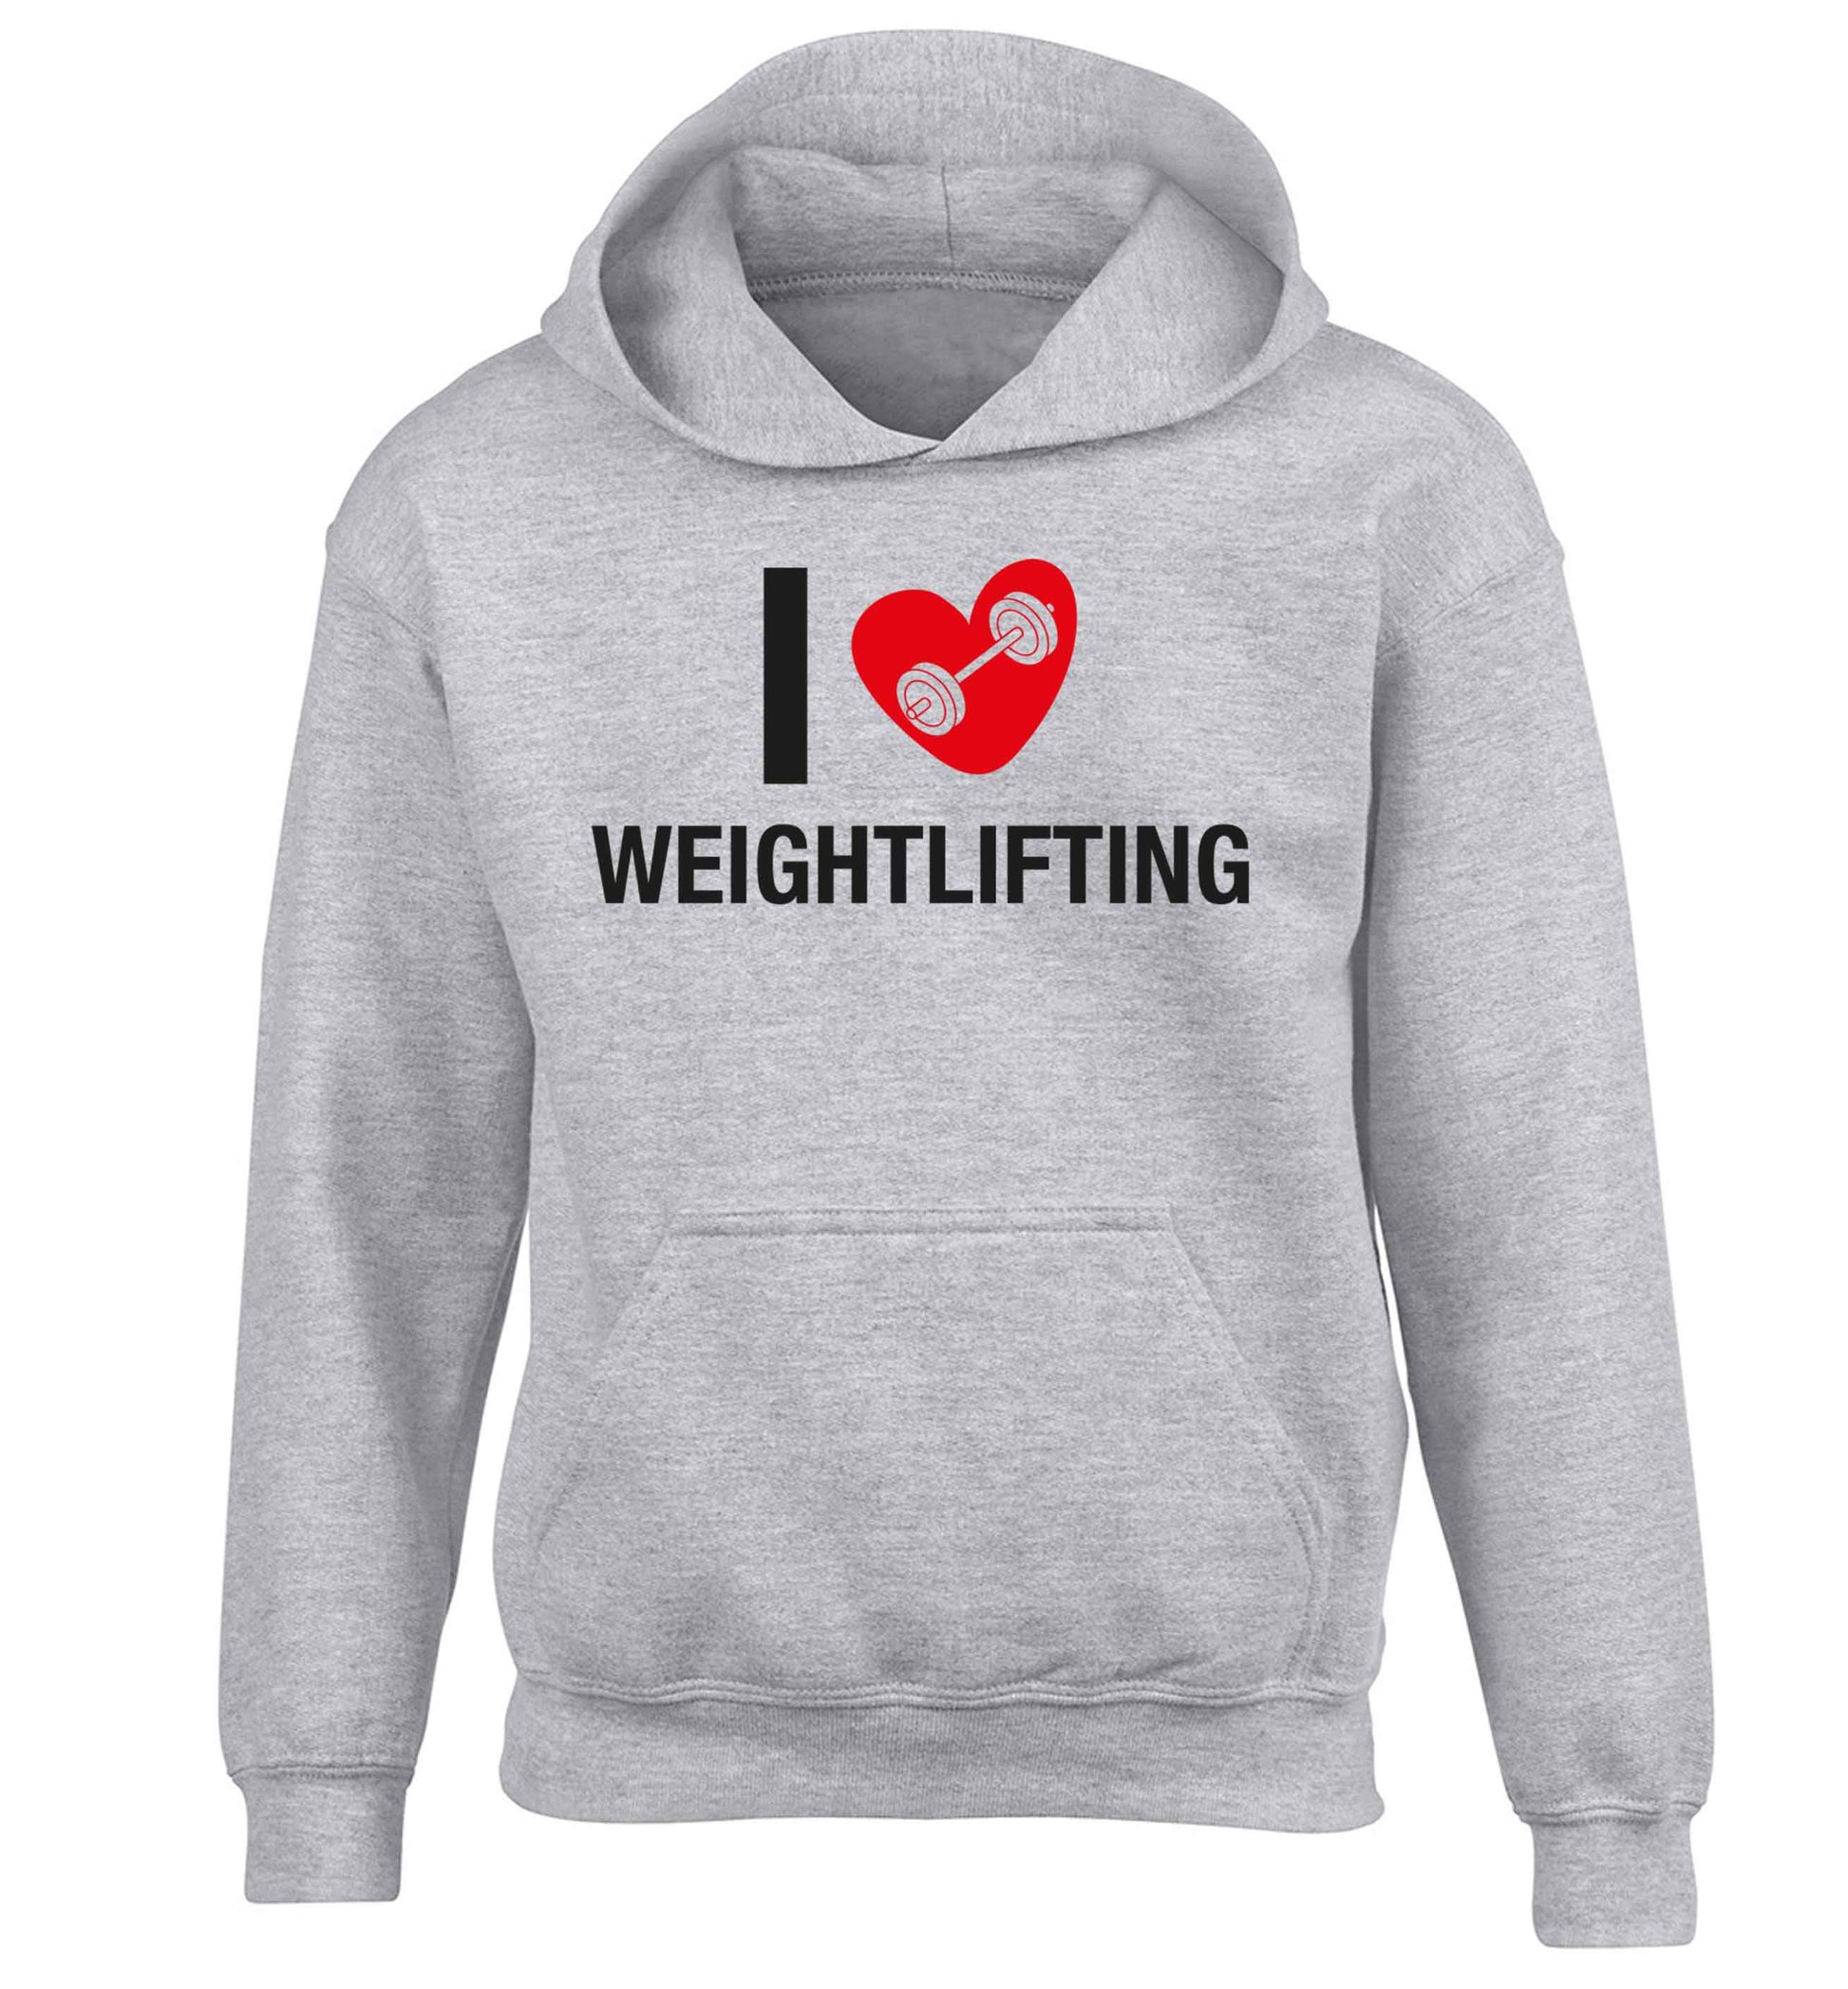 I love weightlifting children's grey hoodie 12-13 Years